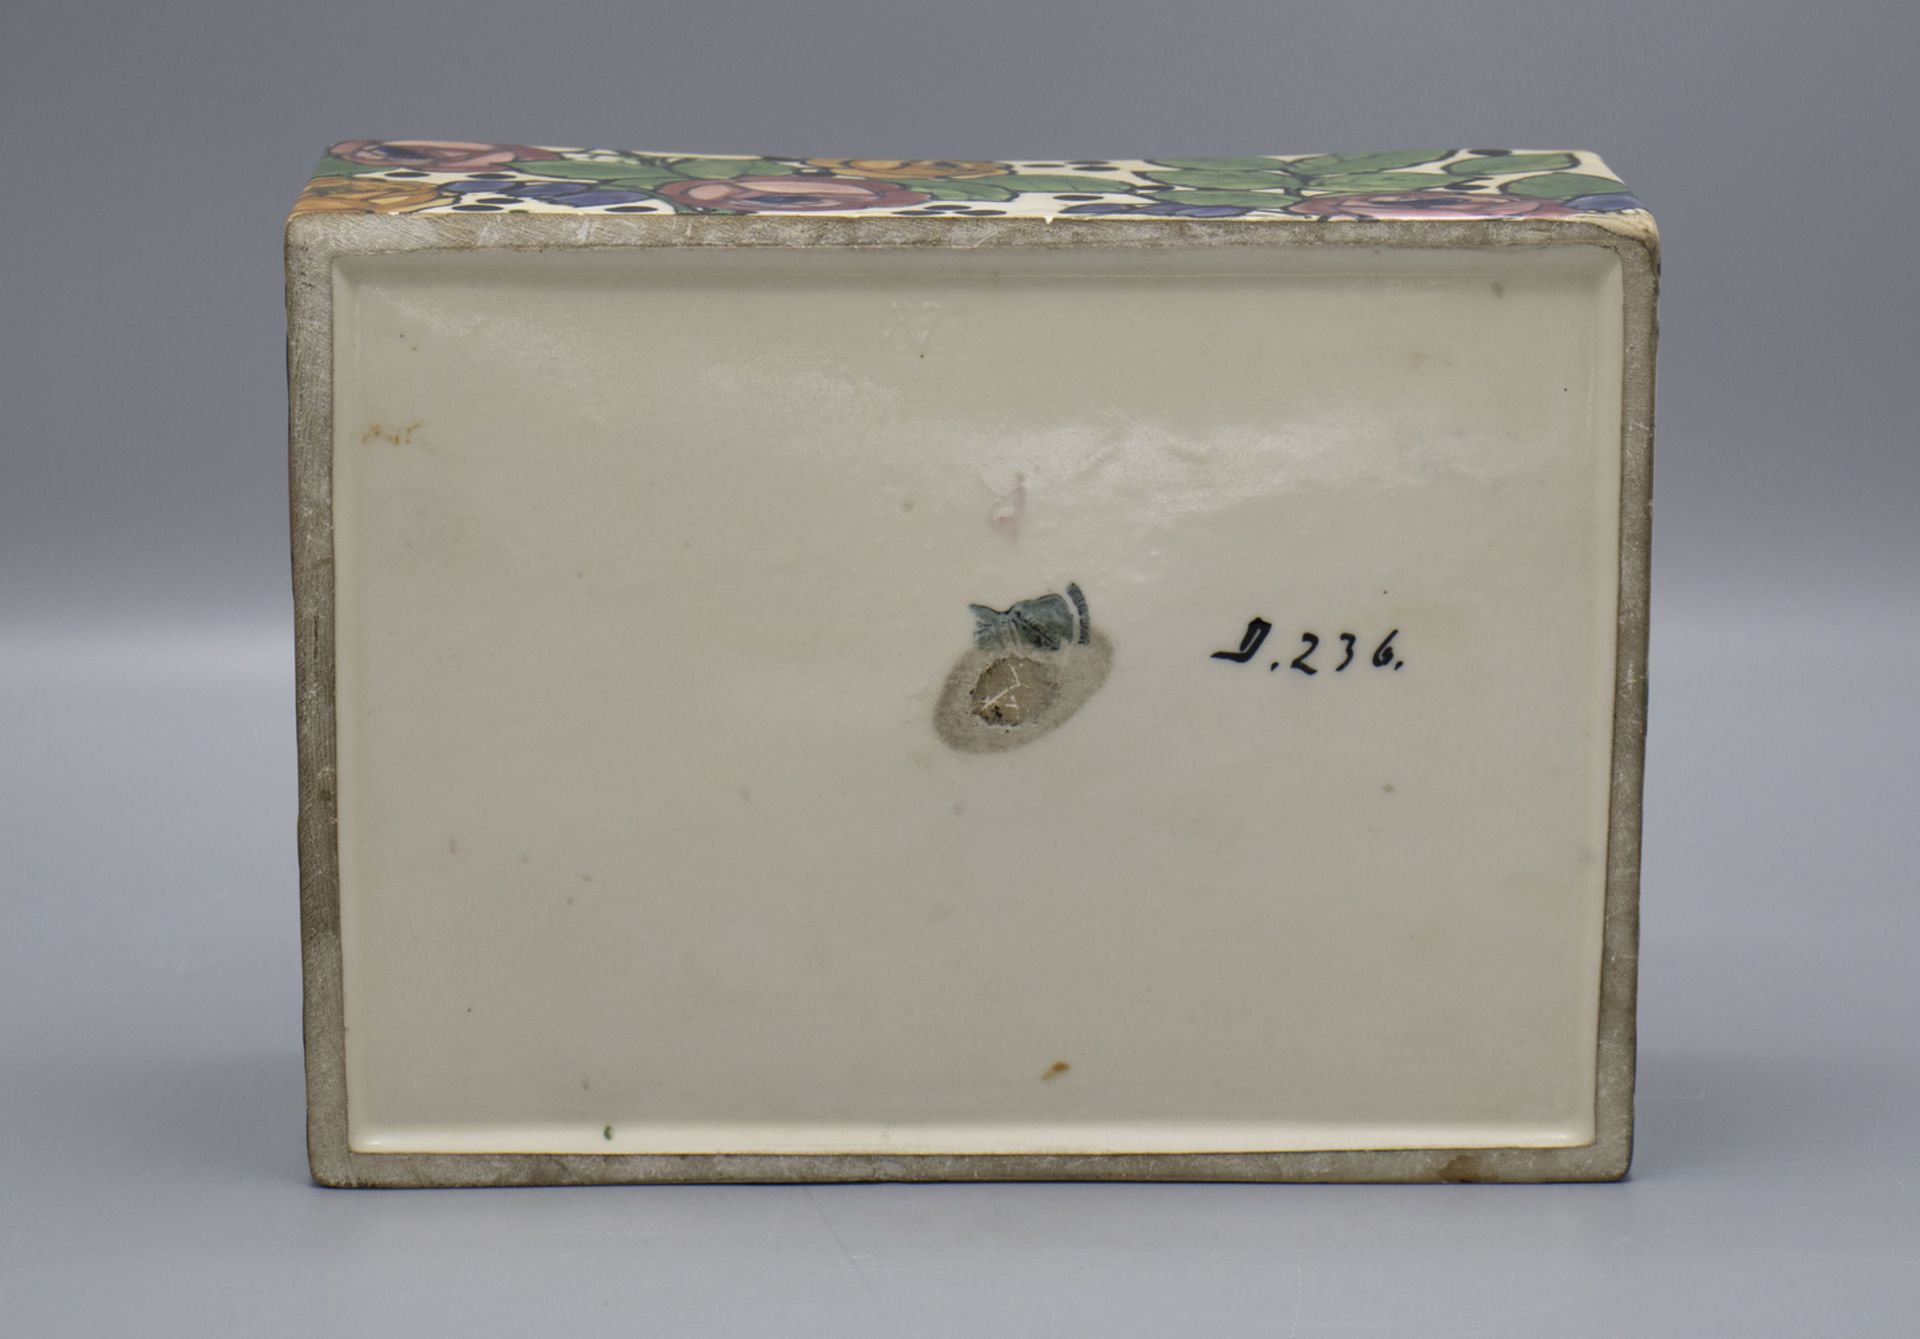 Keramik Deckeldose / A ceramic lidded box, um 1900 - Image 4 of 4